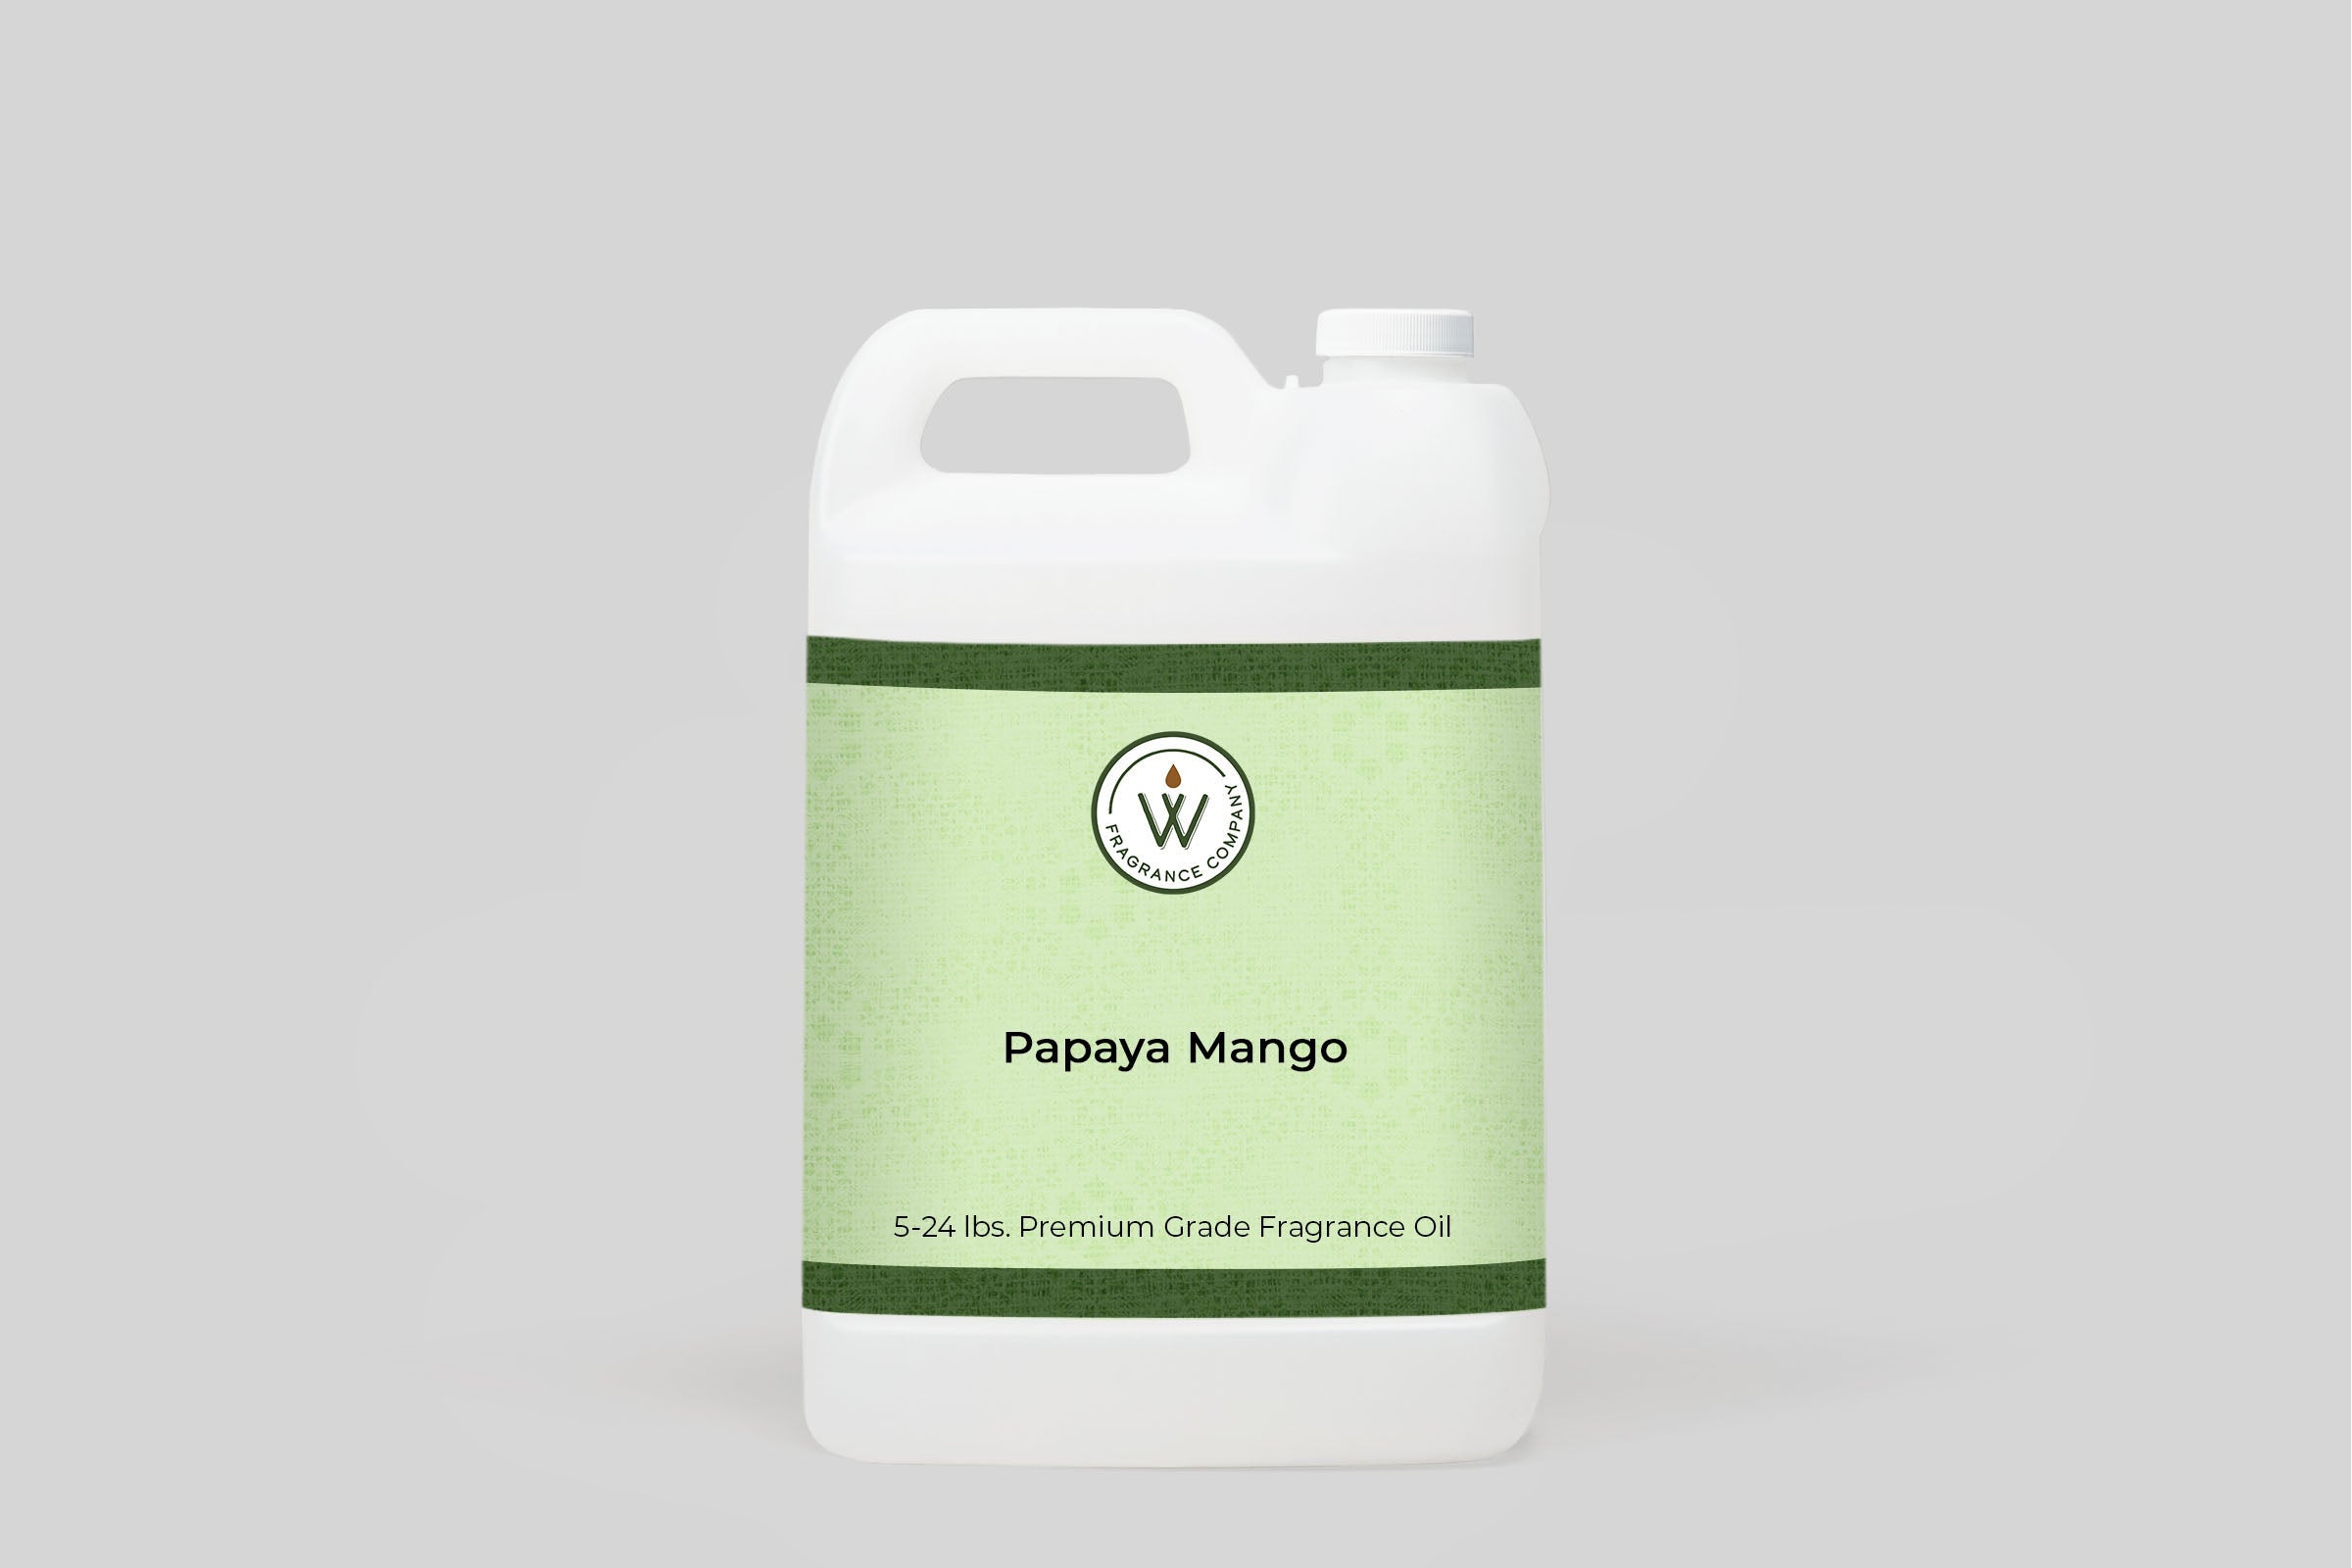 Papaya Mango Fragrance Oil